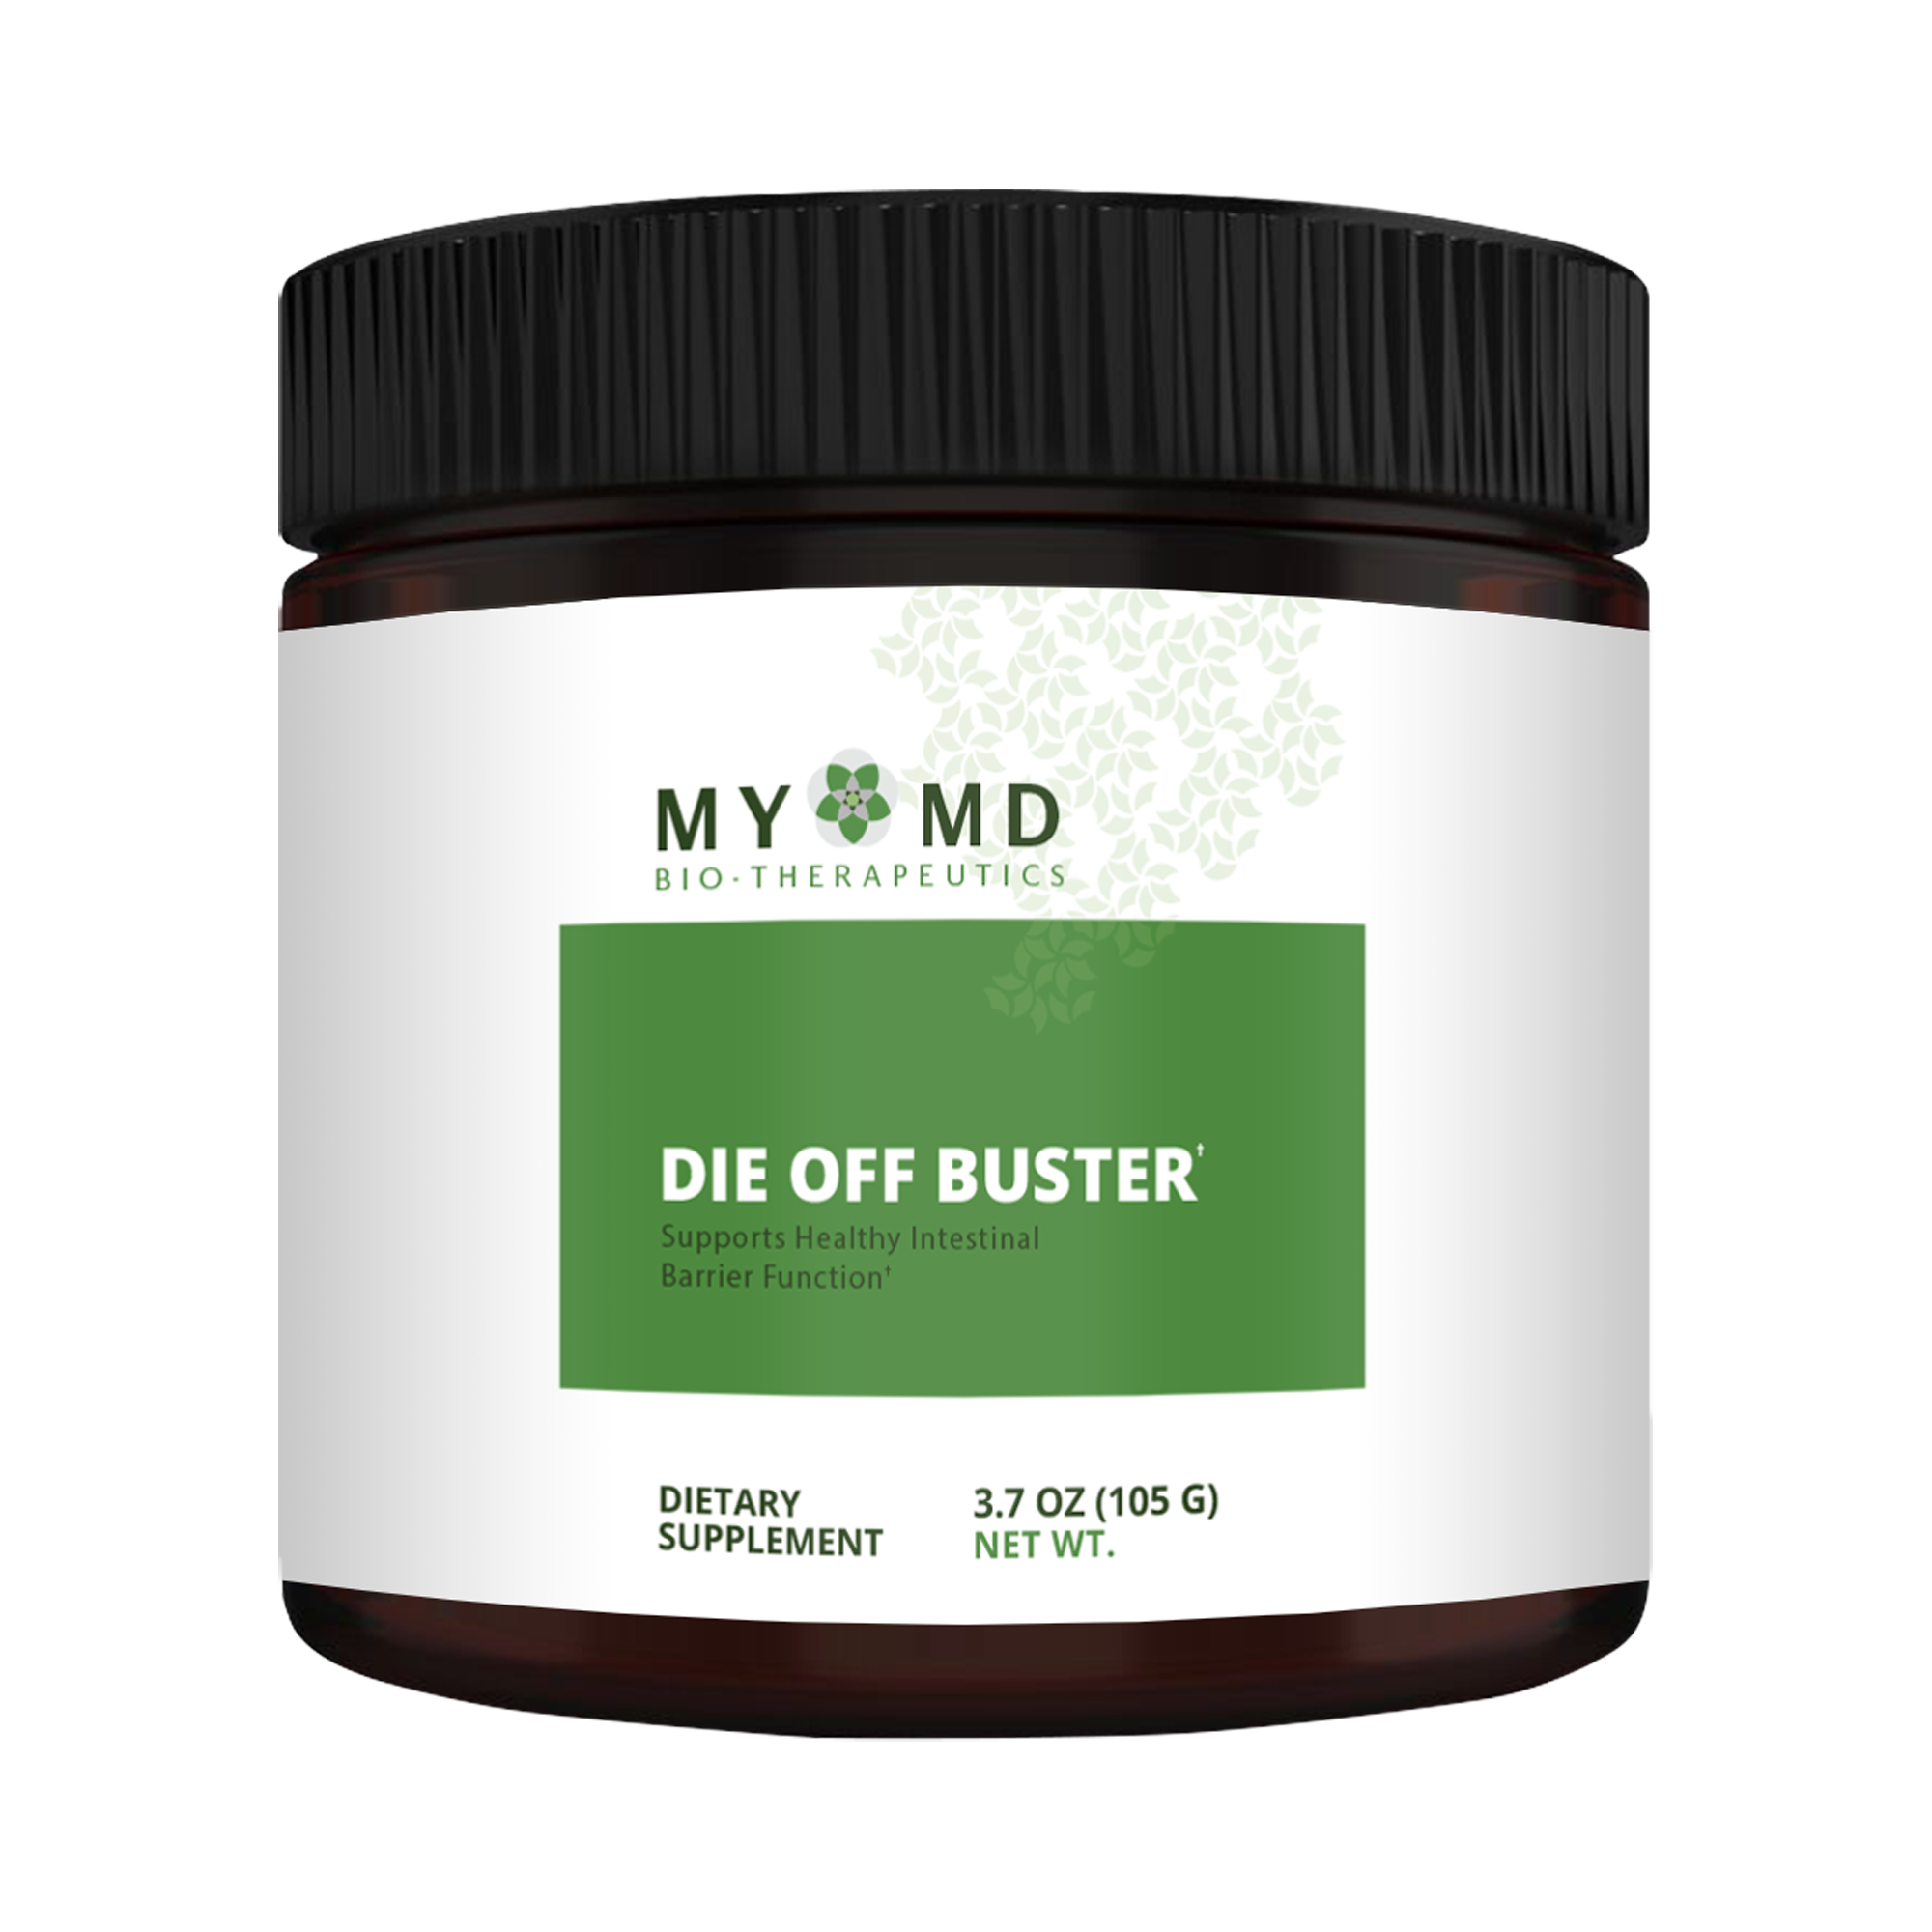 DIE OFF BUSTER - Dairy Free Serum-Derived Bovine Immunoglobulin, ImmunoLin, and NAG